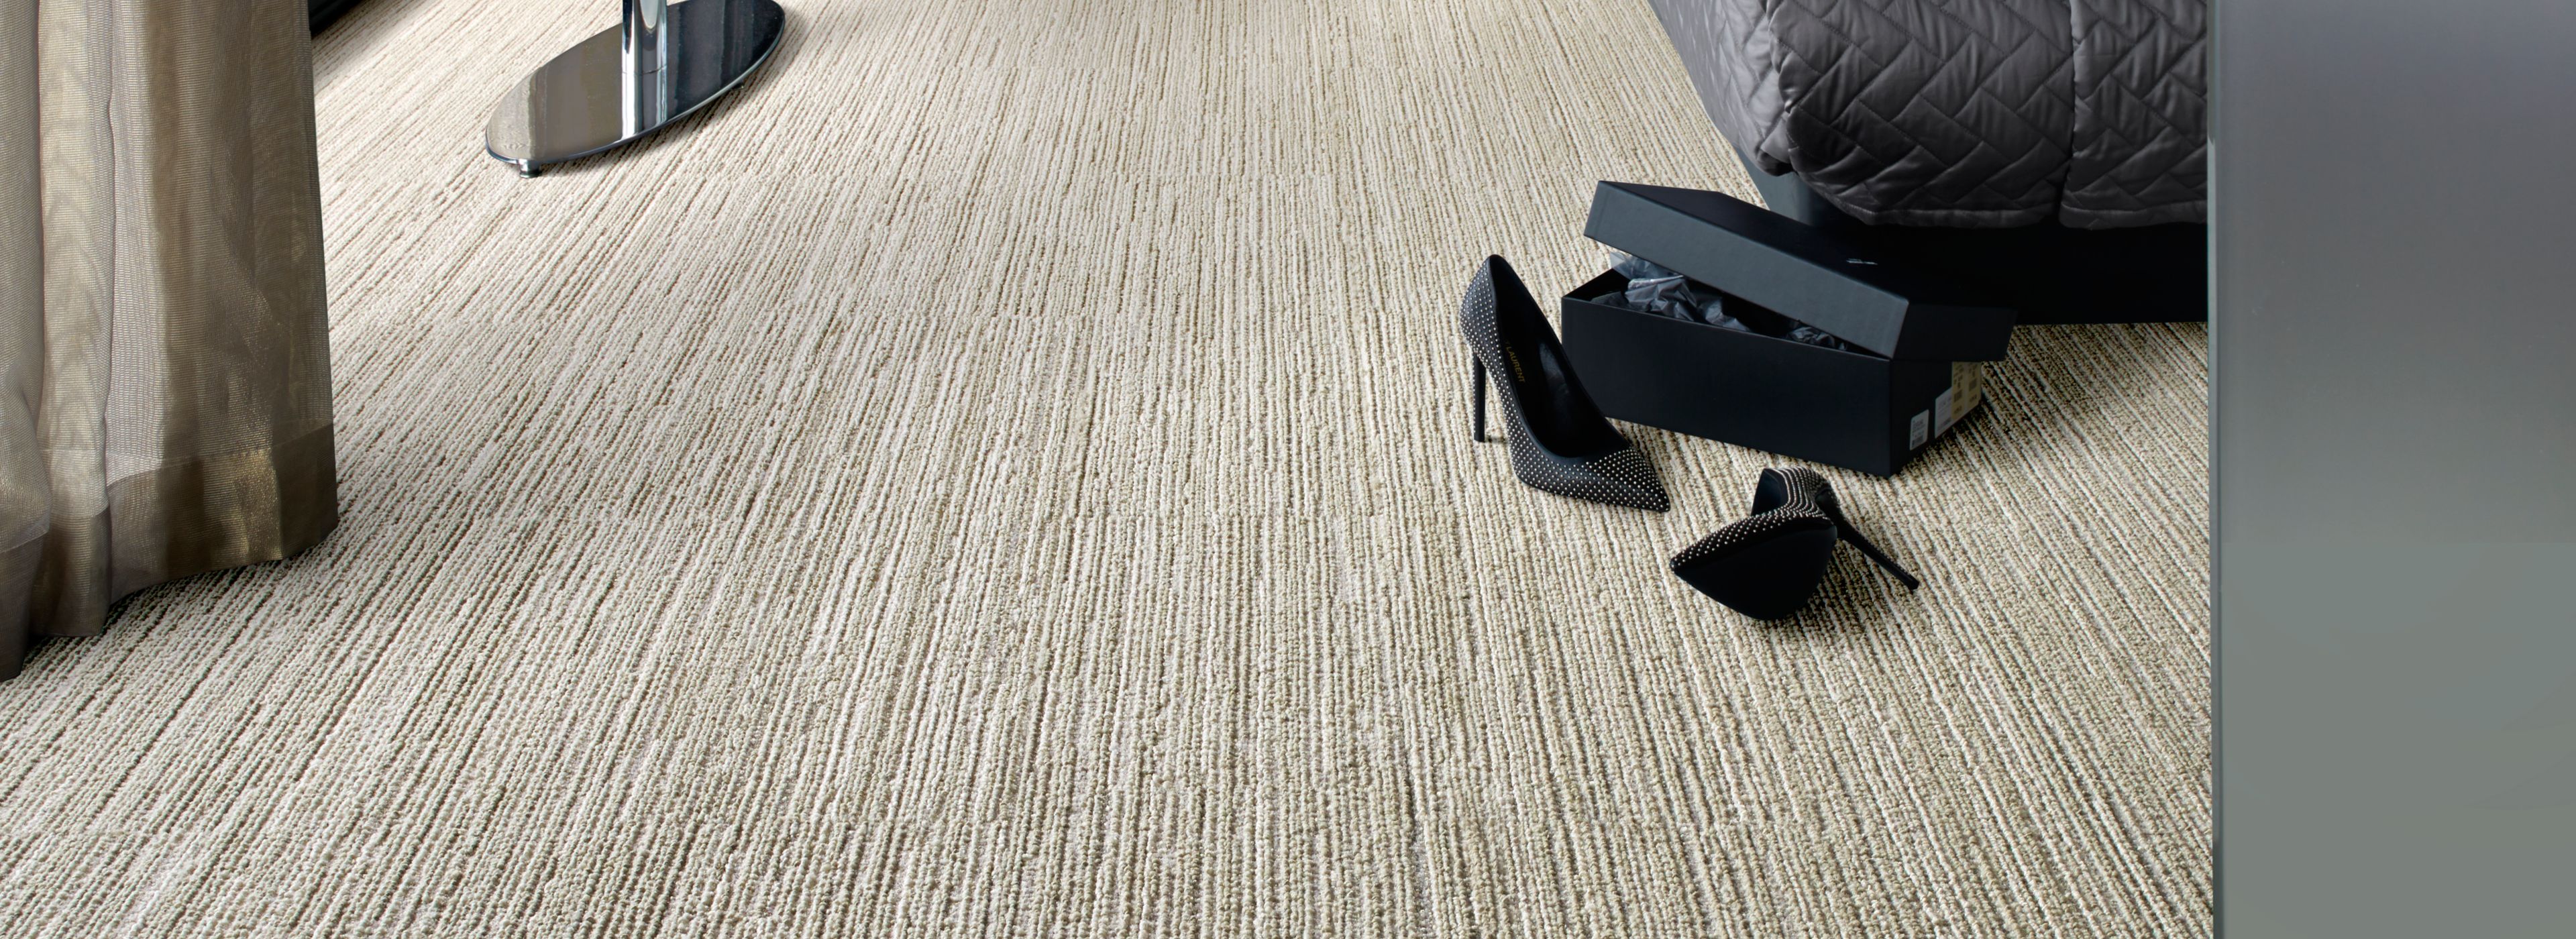 Interface RMS 101 carpet tile in hotel guest room imagen número 1